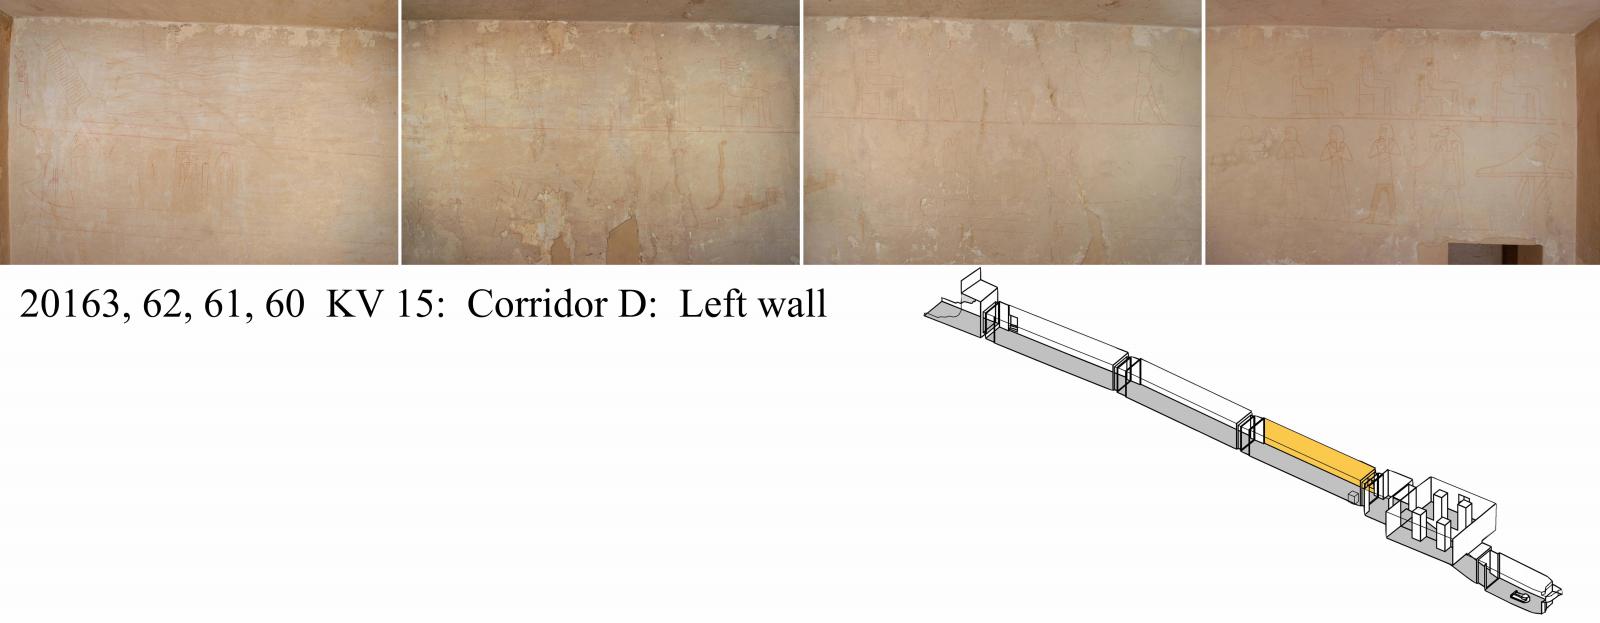 Left wall, corridor D. 